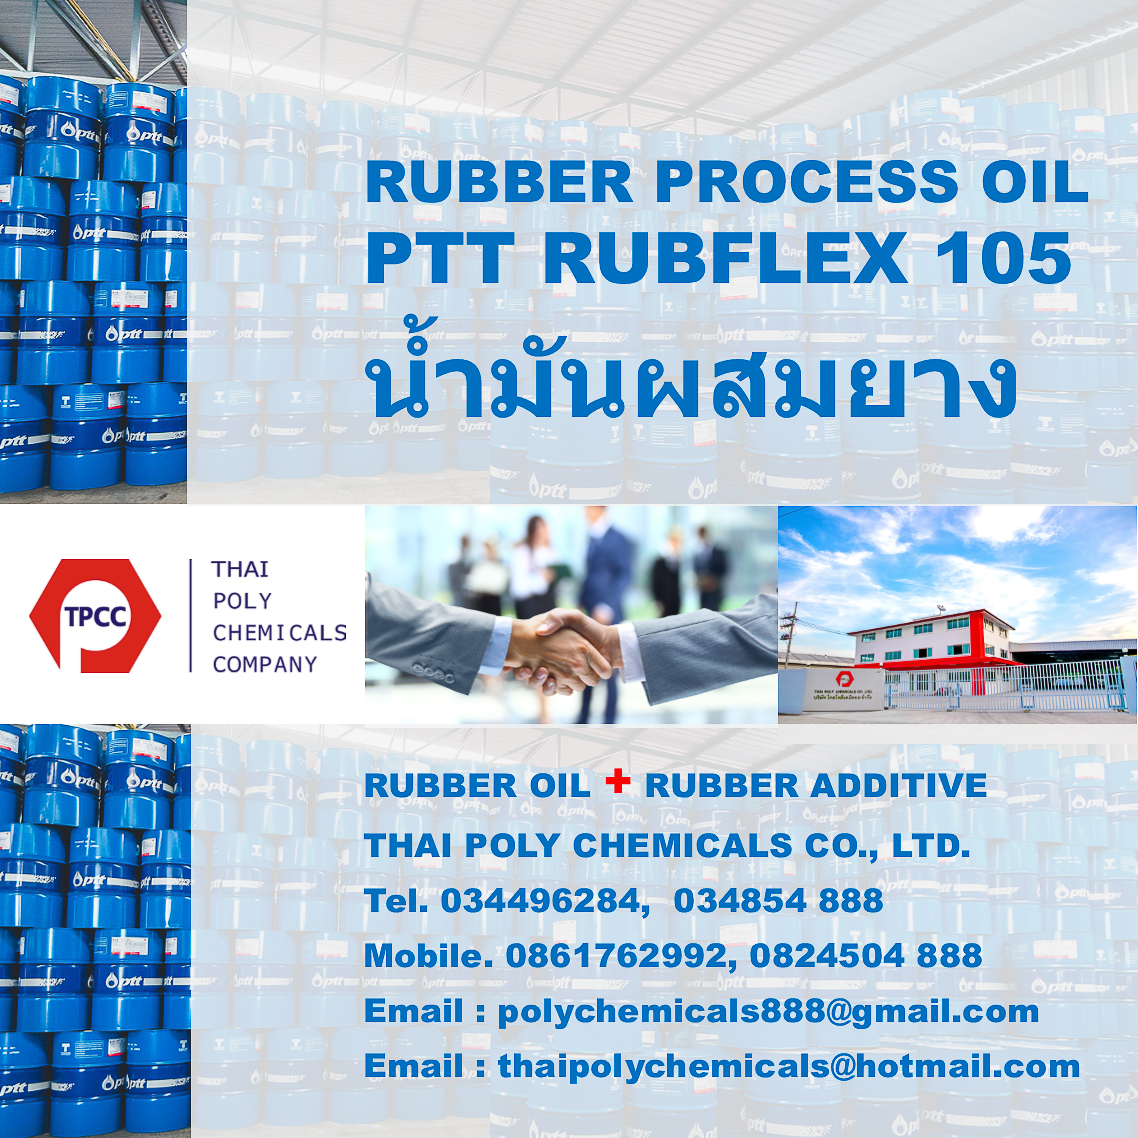 PTT Rubflex, รับเบอร์ออยล์, รับเบอร์โพรเซสออยล์, พีทีทีรับเฟลกซ์, Rubber Oil, Rubber Process Oil รูปที่ 1